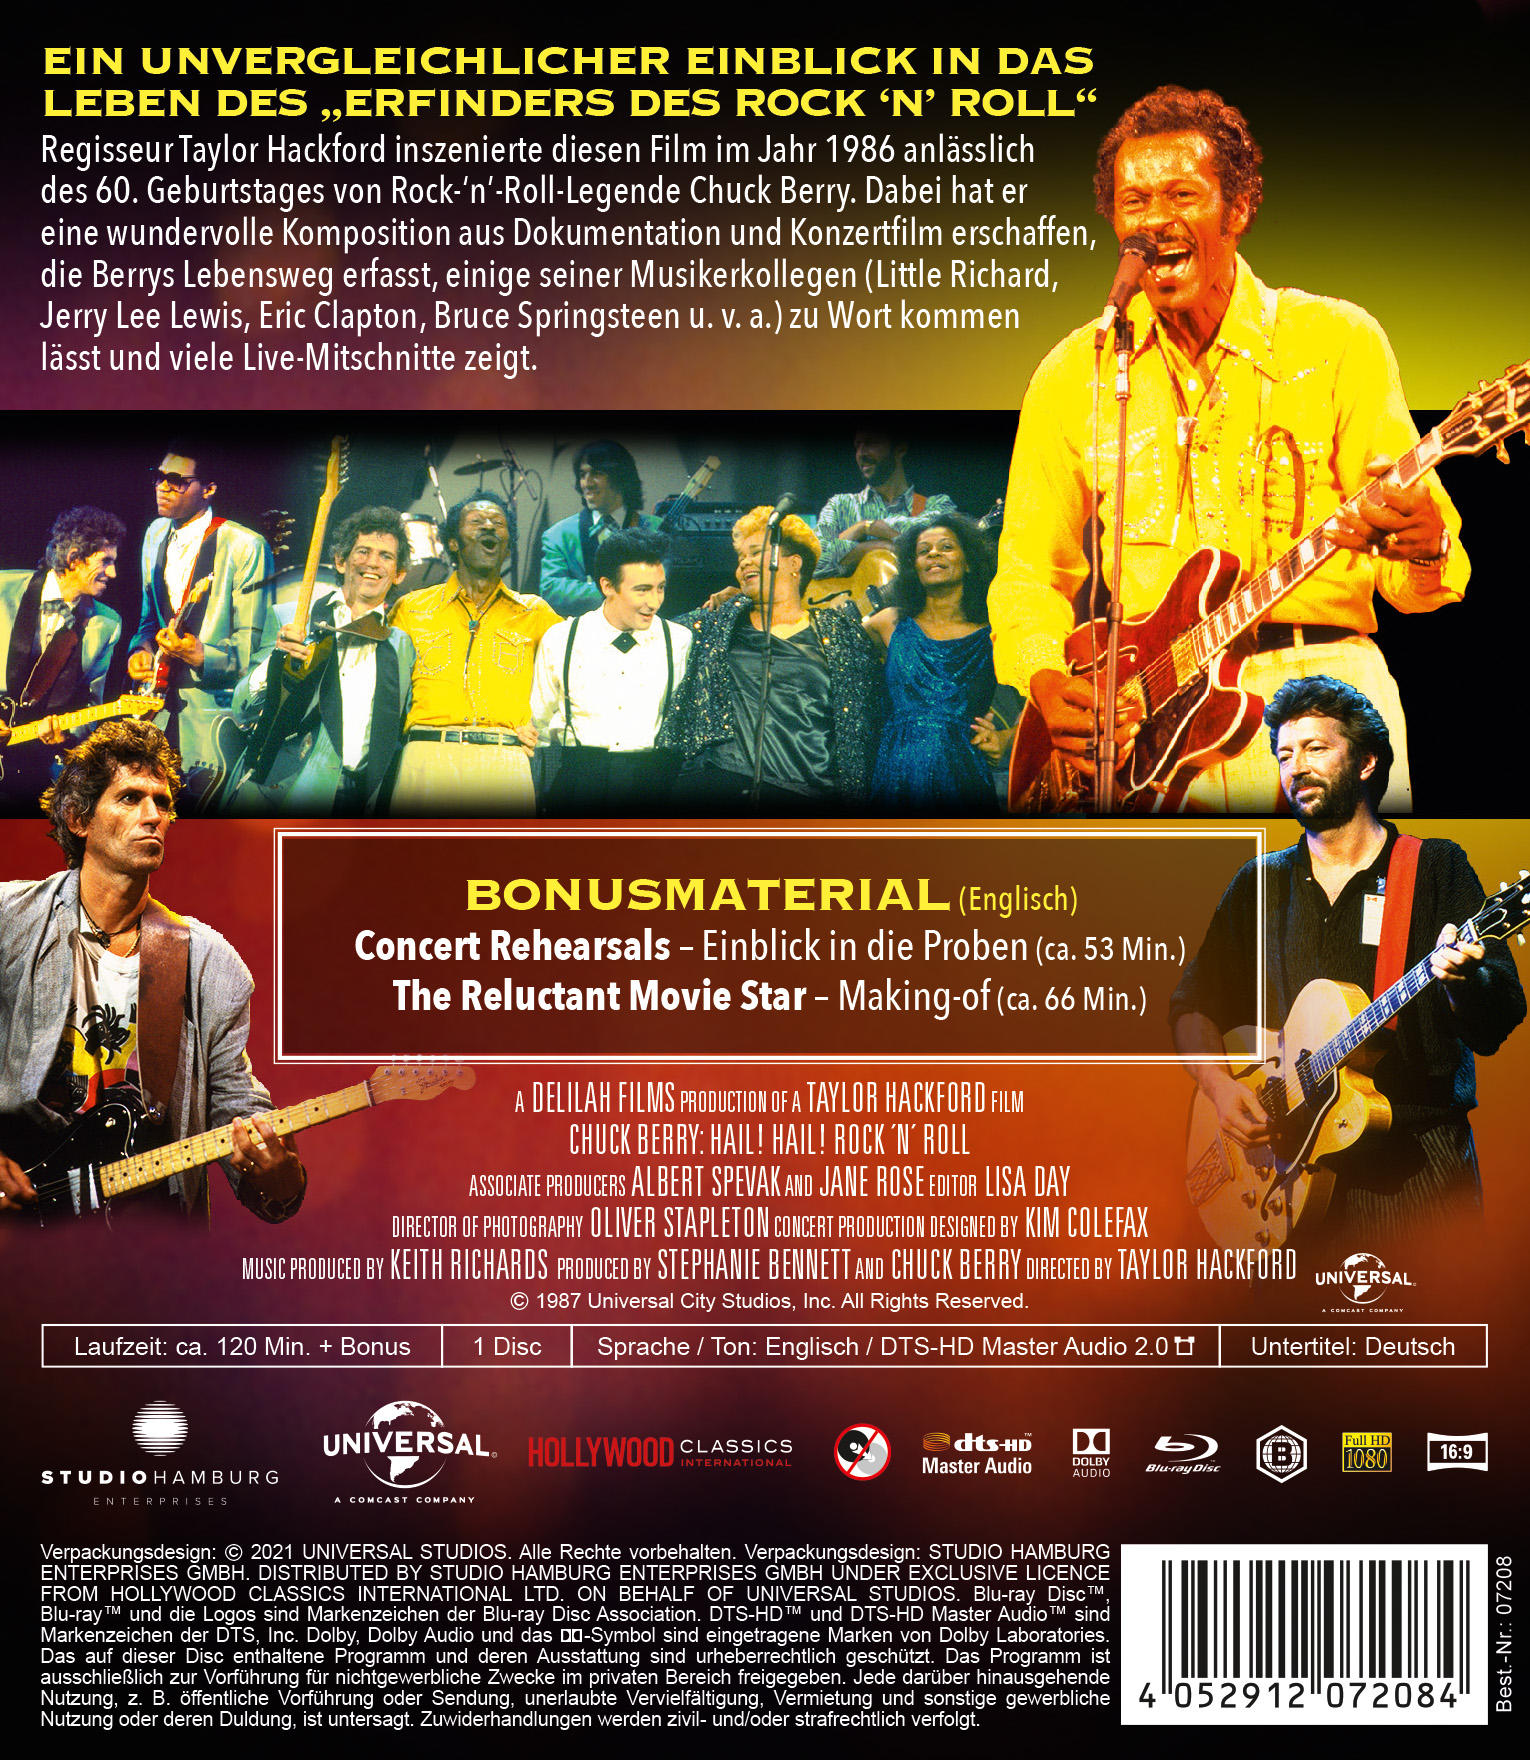 (Blu-ray) Roll - Chuck Hail, Hail...Rock\'n\' Berry -